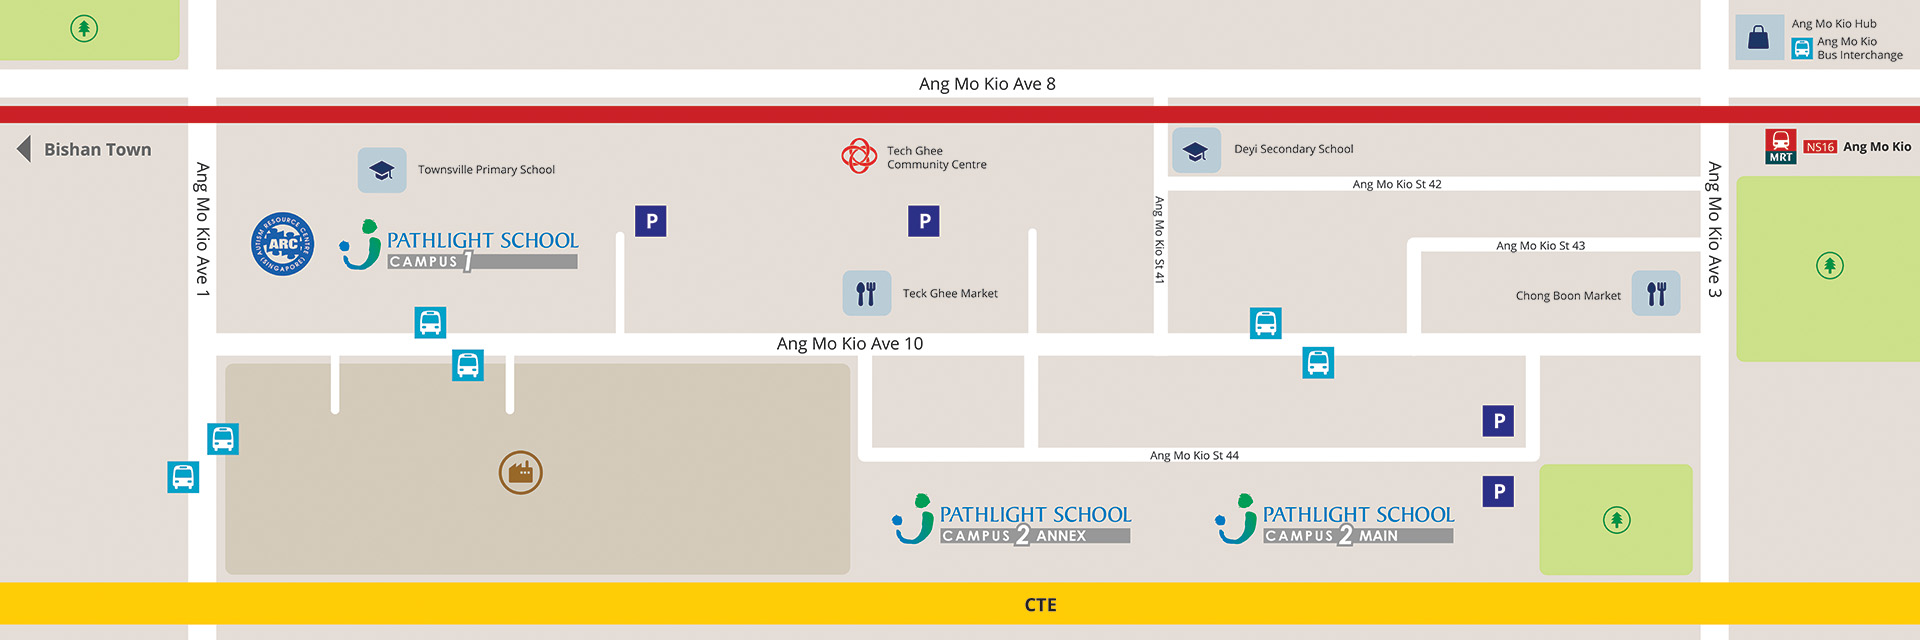 Pathlight School Campus Map